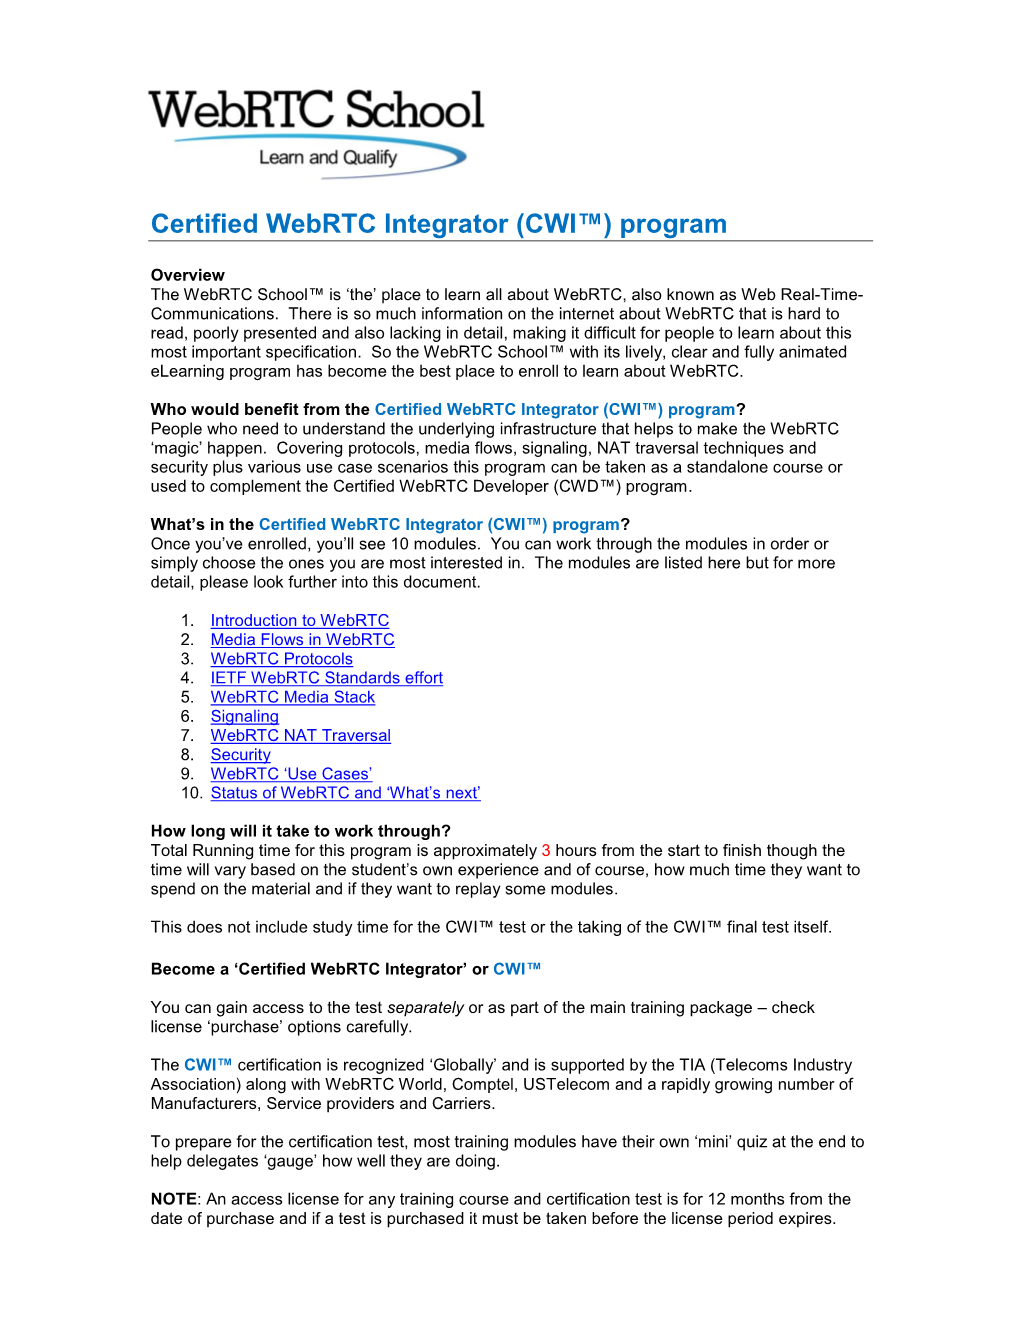 Certified Webrtc Integrator (CWI™) Program